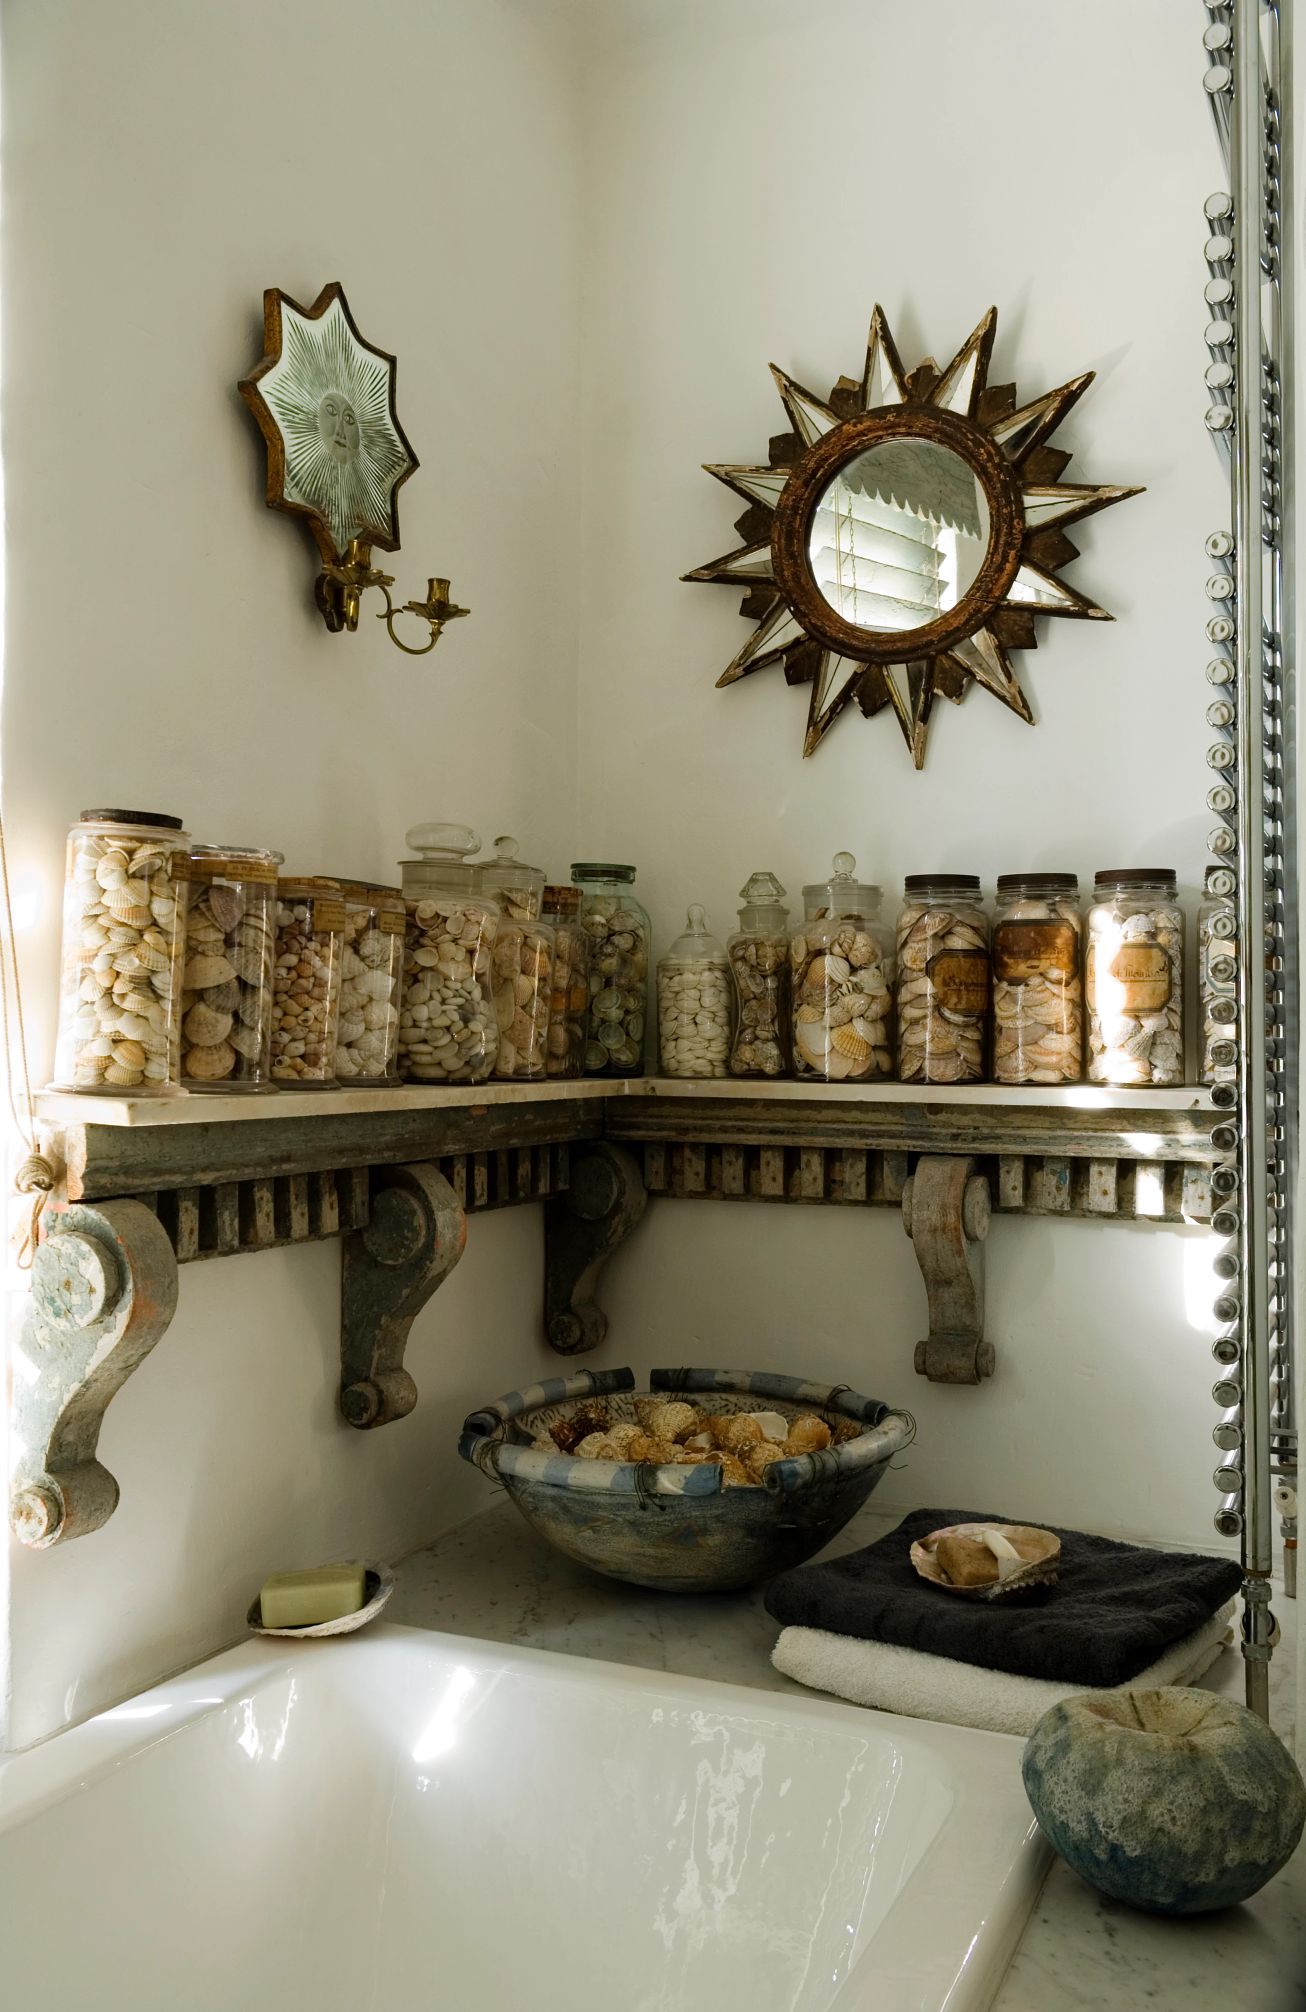 rocks in jars displayed on a shelf over a bathtub